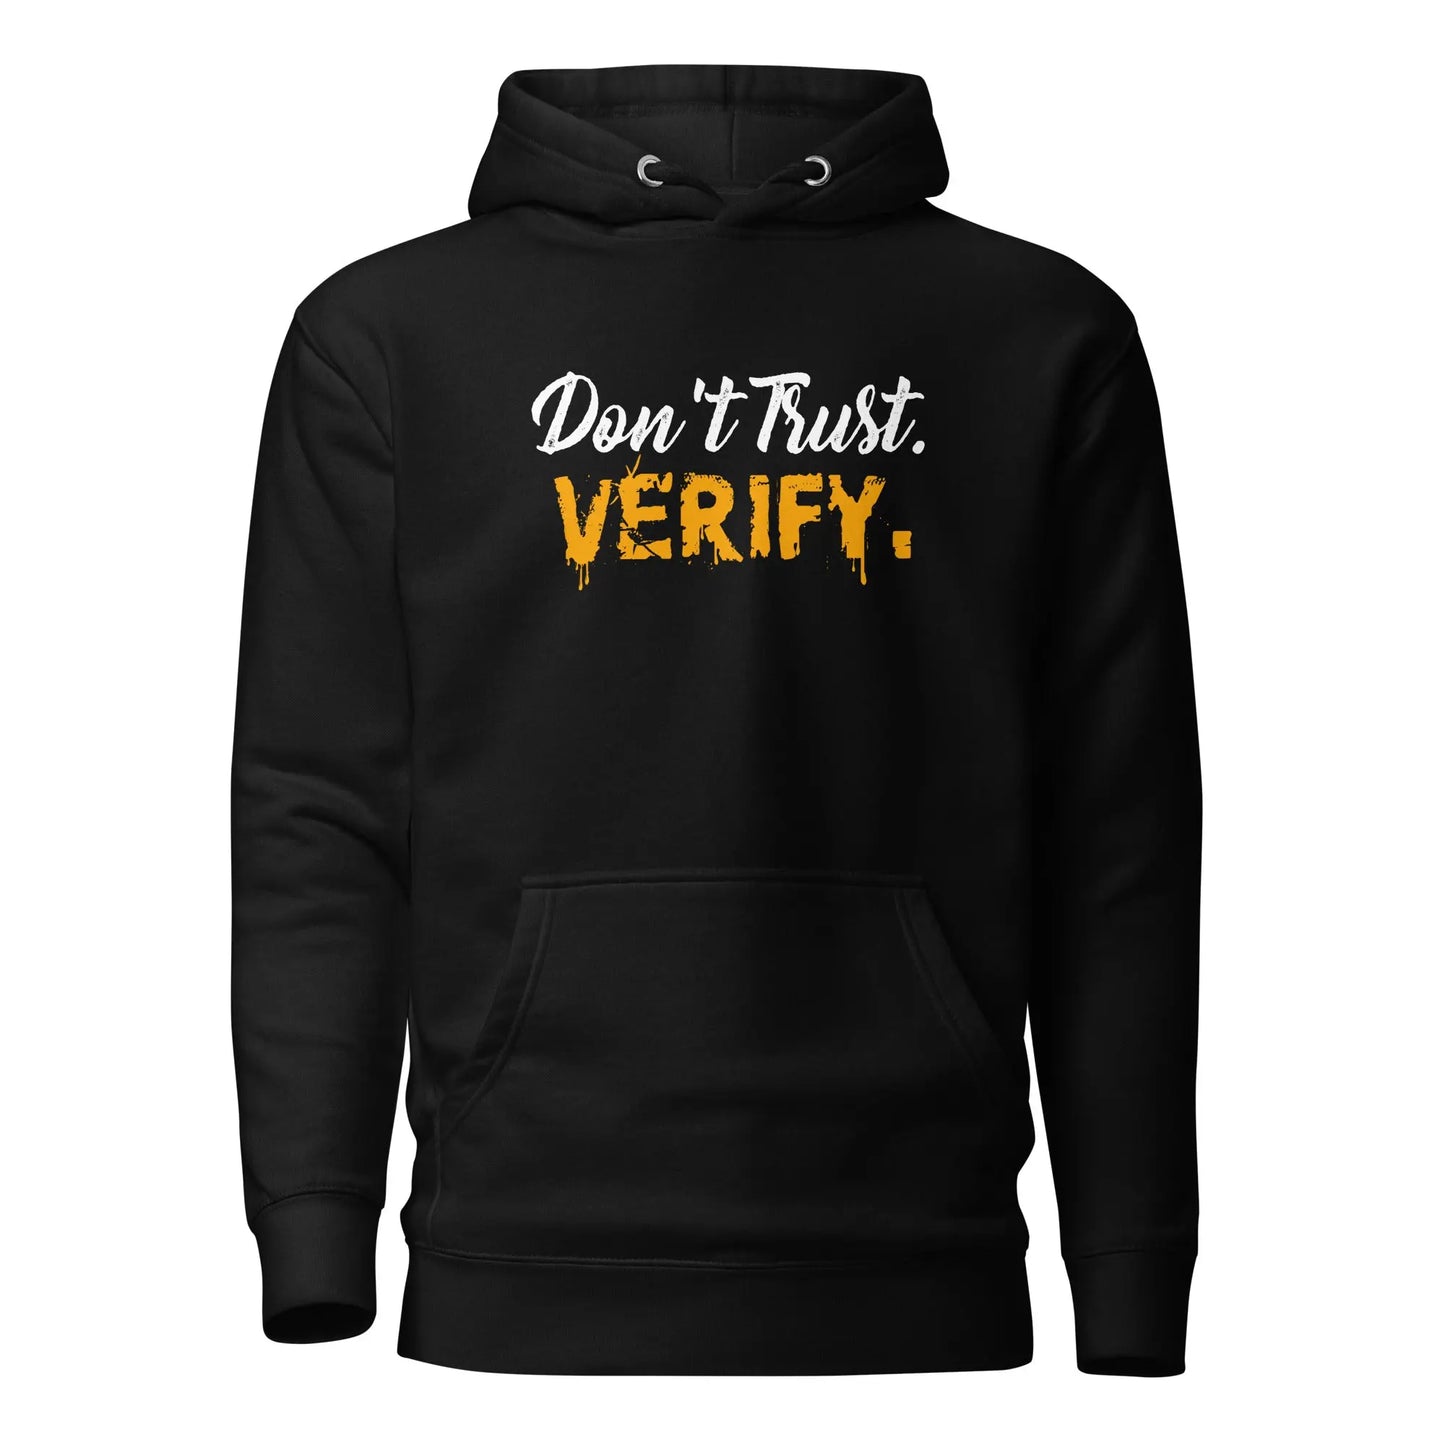 Don`t Trust Verify - Premium Unisex Organic Cotton Bitcoin T-shirt Store of Value